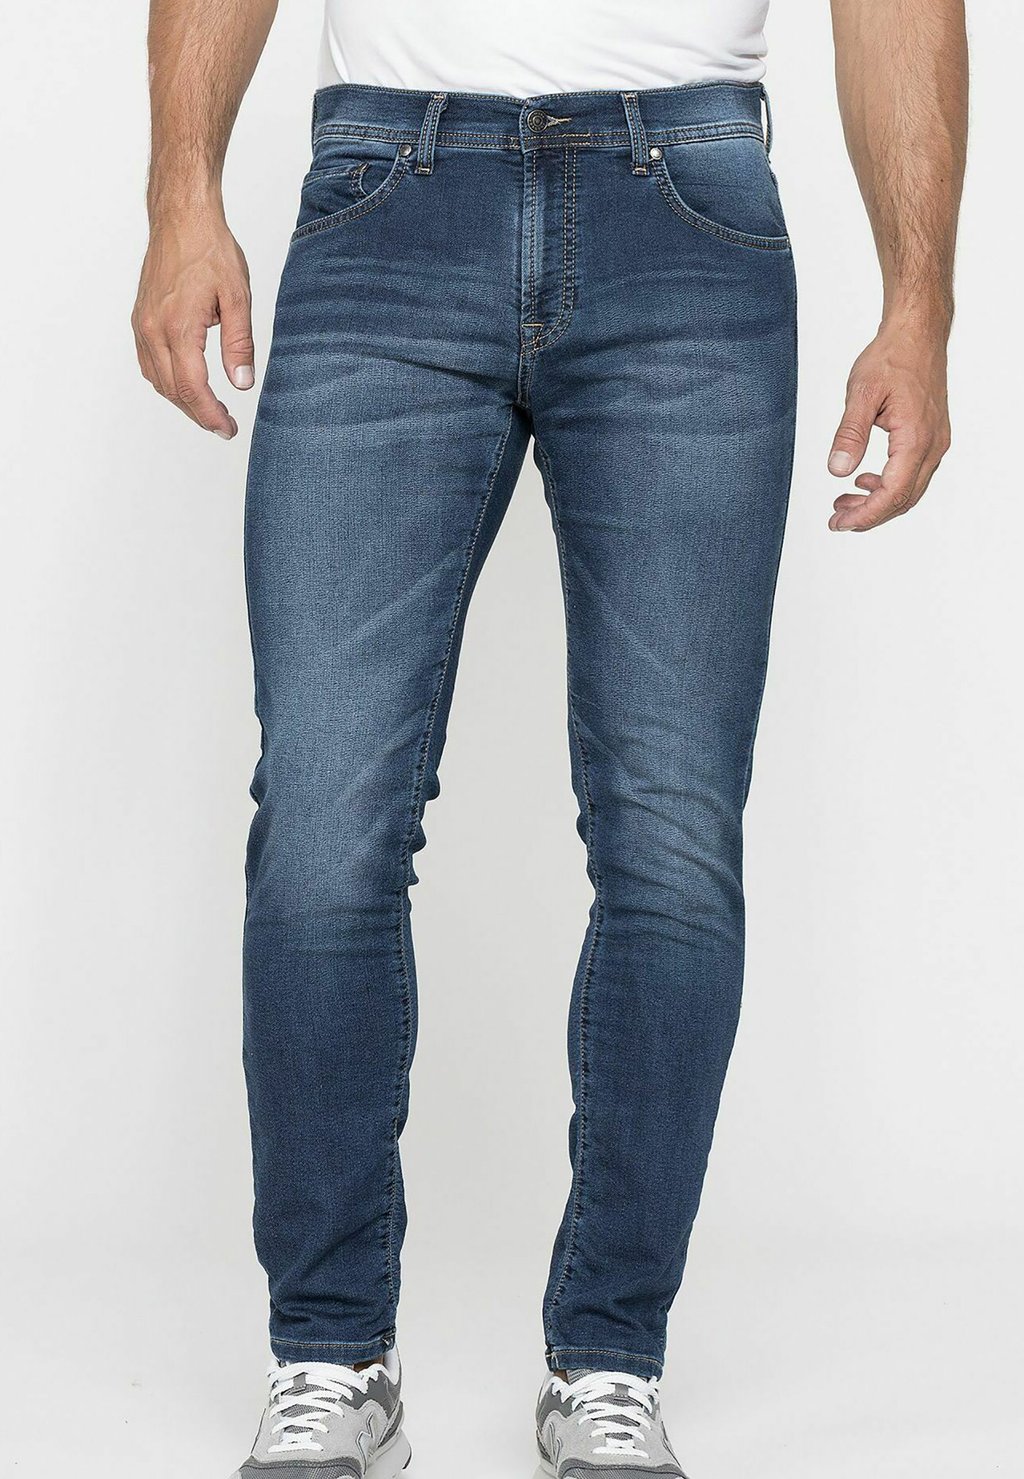 Узкие джинсы Per Uomo Carrera Jeans, цвет lavaggio blu medio/stone wash